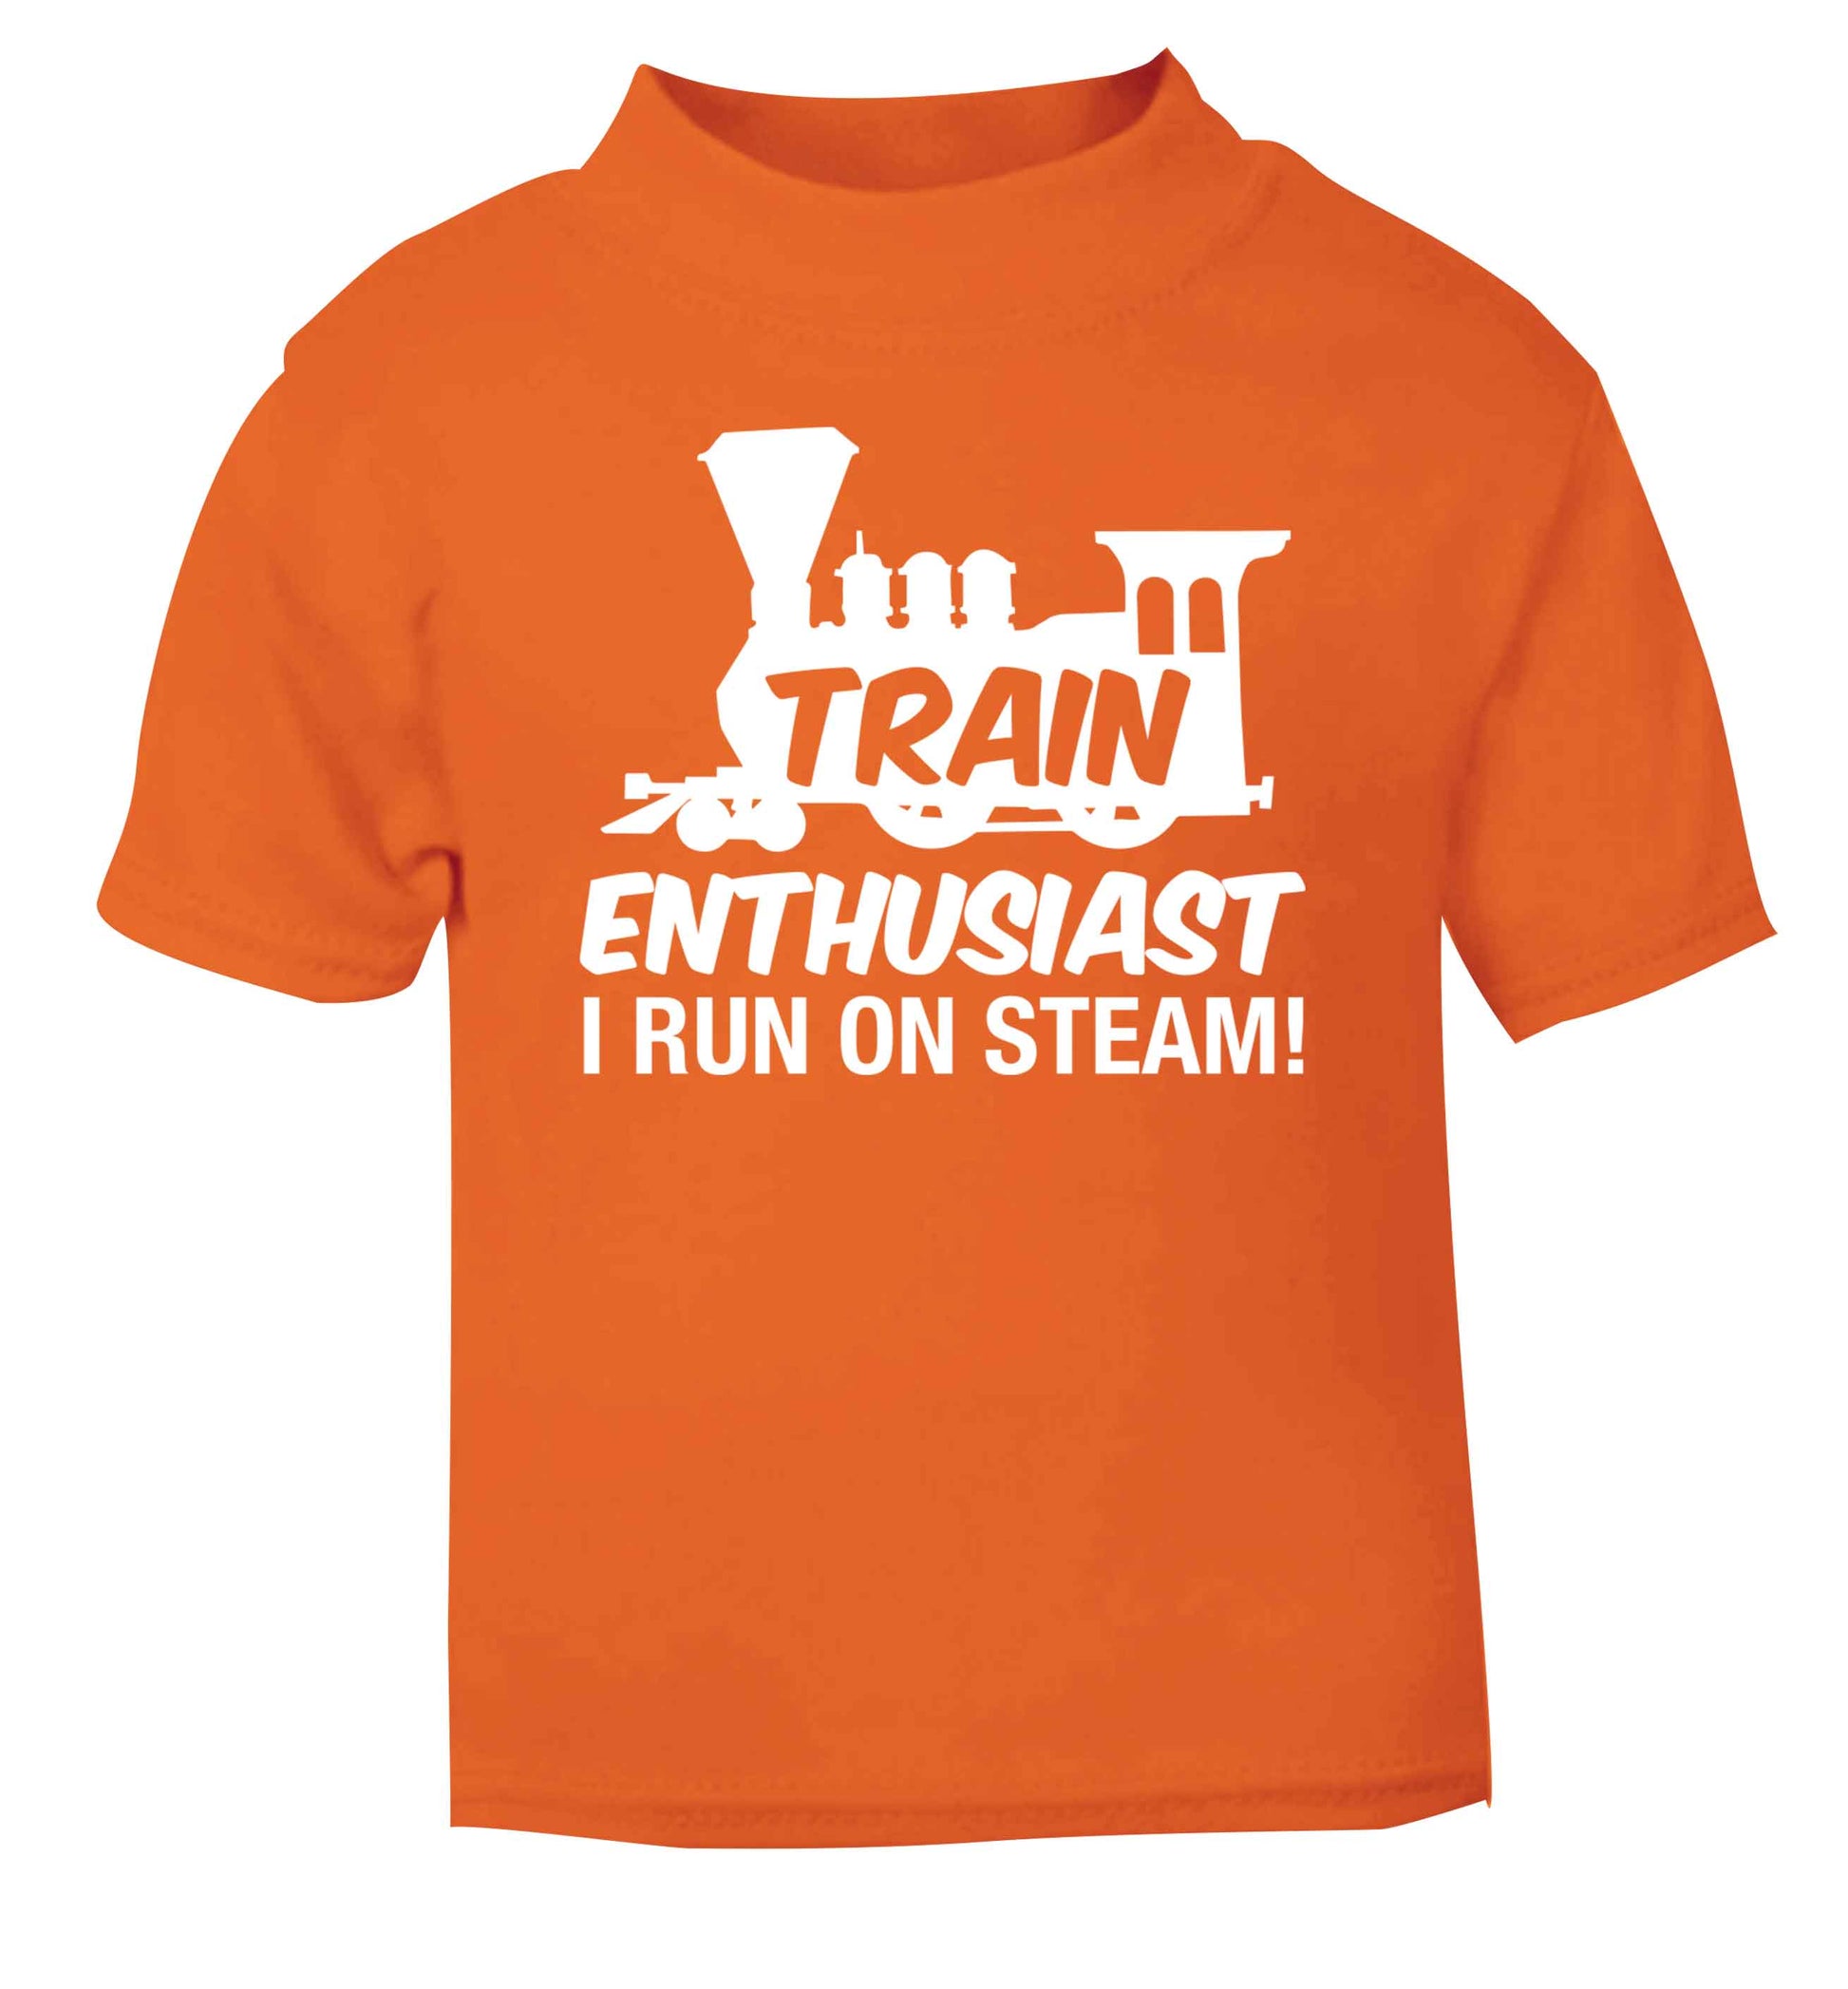 Train enthusiast I run on steam orange Baby Toddler Tshirt 2 Years